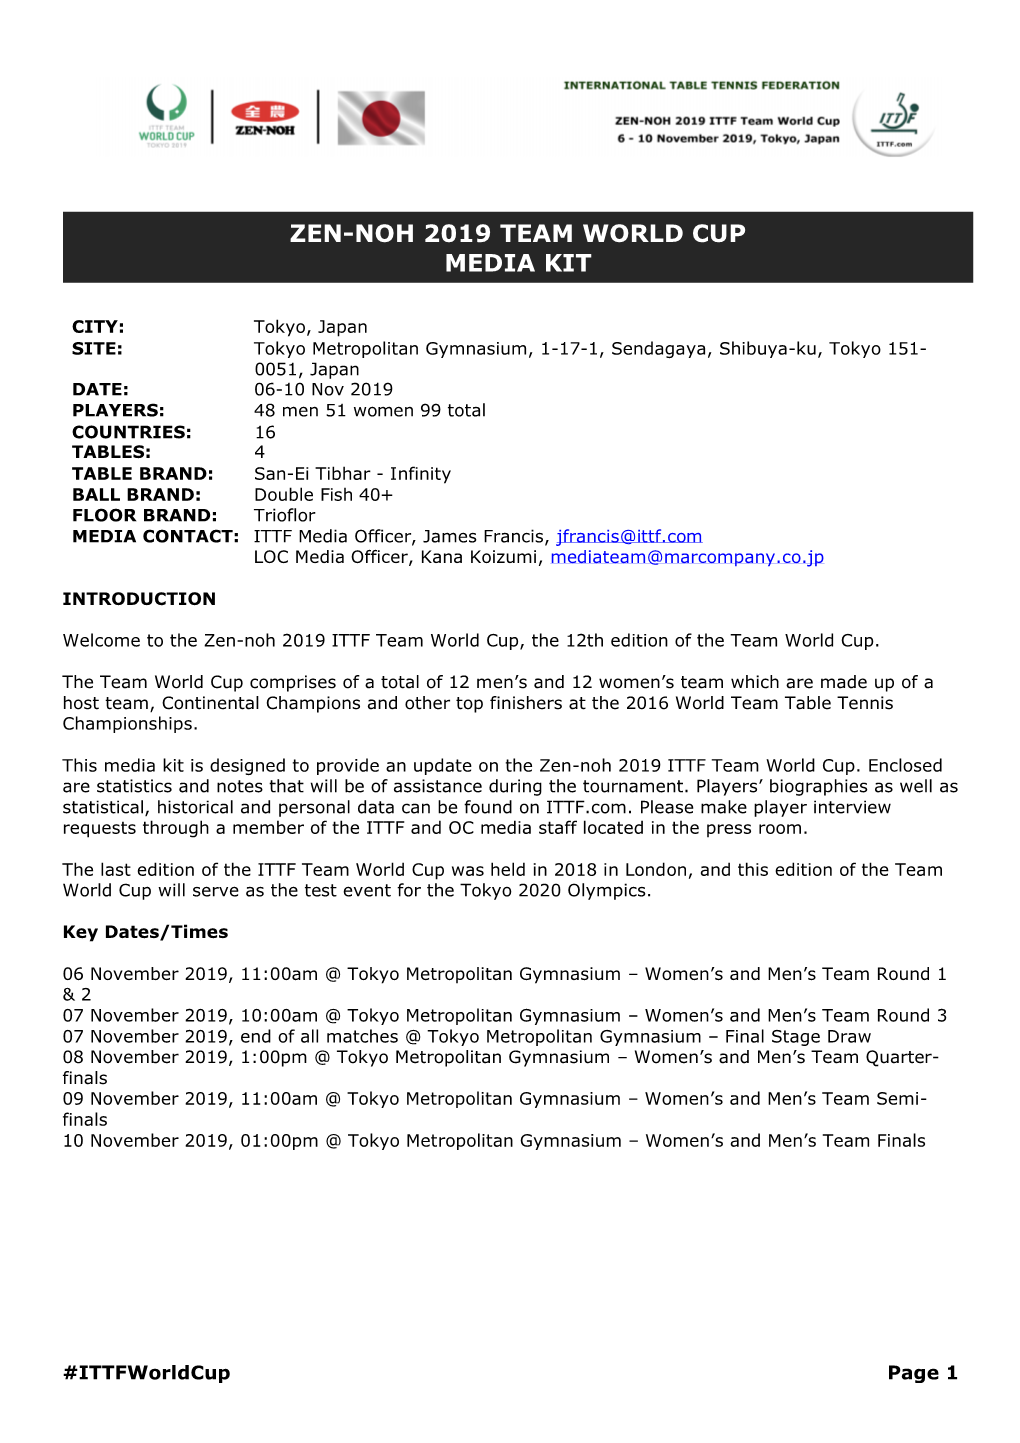 Zen-Noh 2019 Team World Cup Media Kit